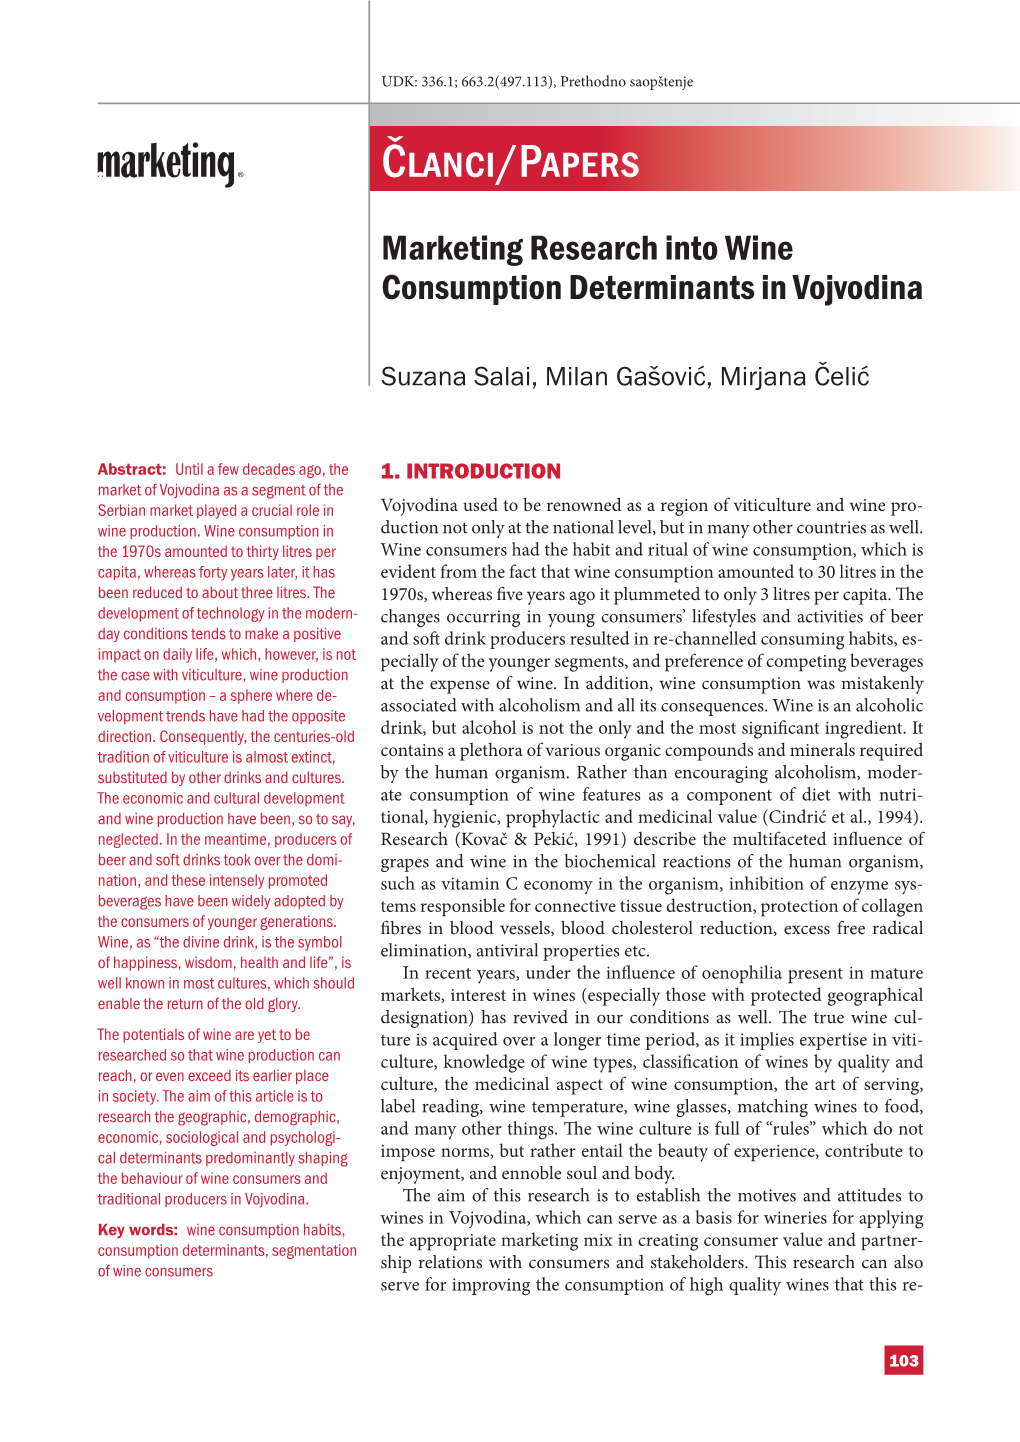 Marketing Research Into Wine Consumption Determinants in Vojvodina